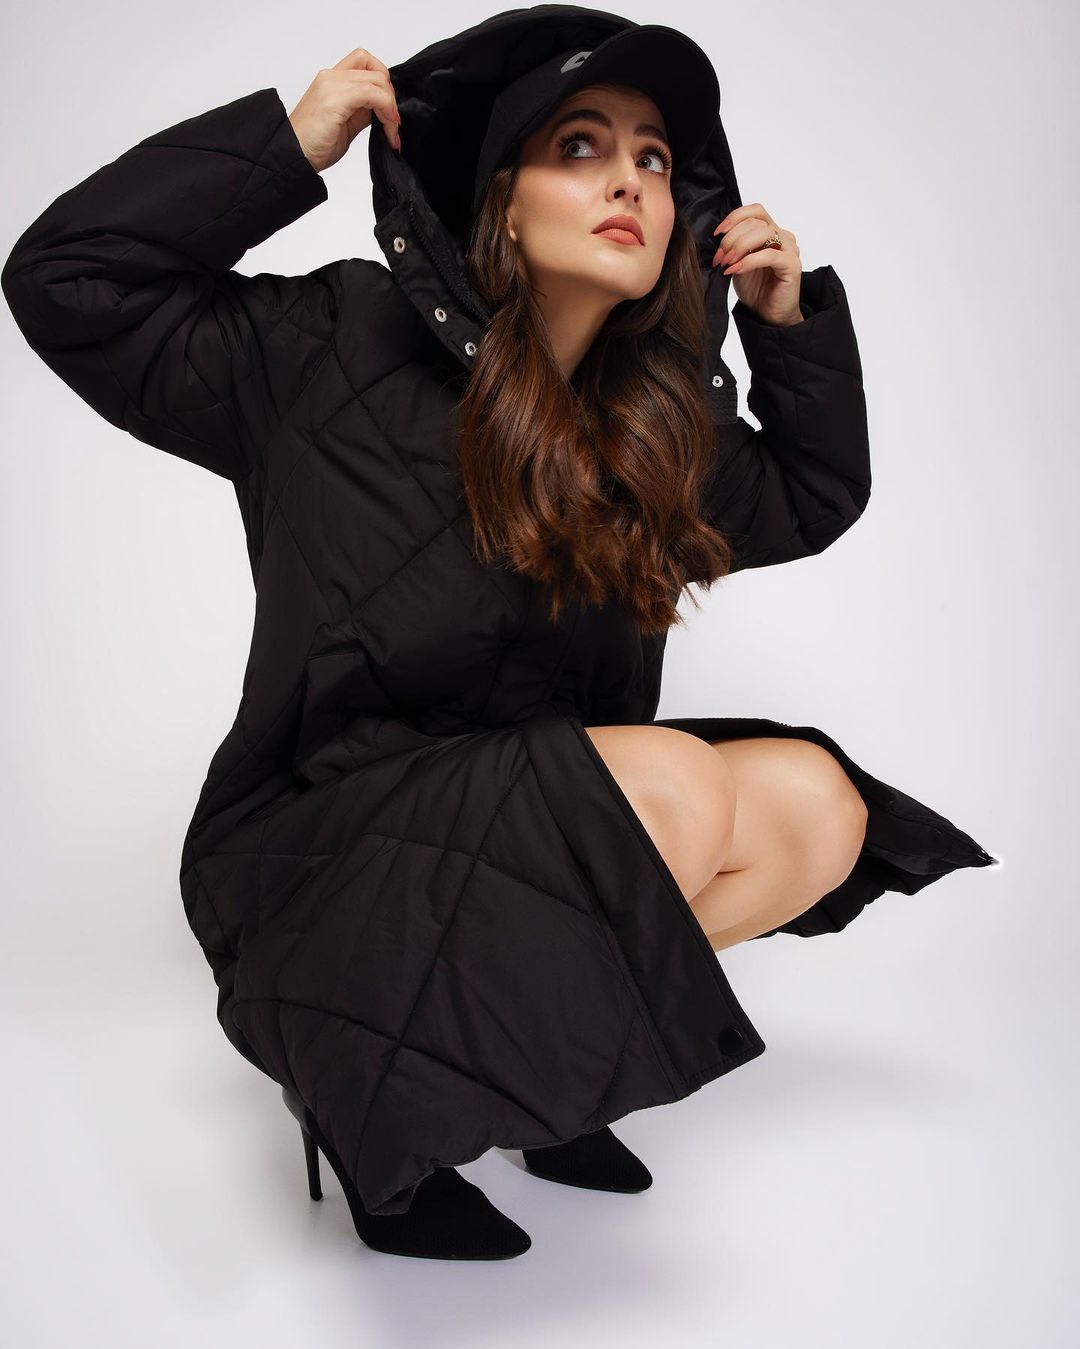 HINDI ACTRESS ELLI AVRRAM IMAGES IN BLACK COLOR DRESS 3